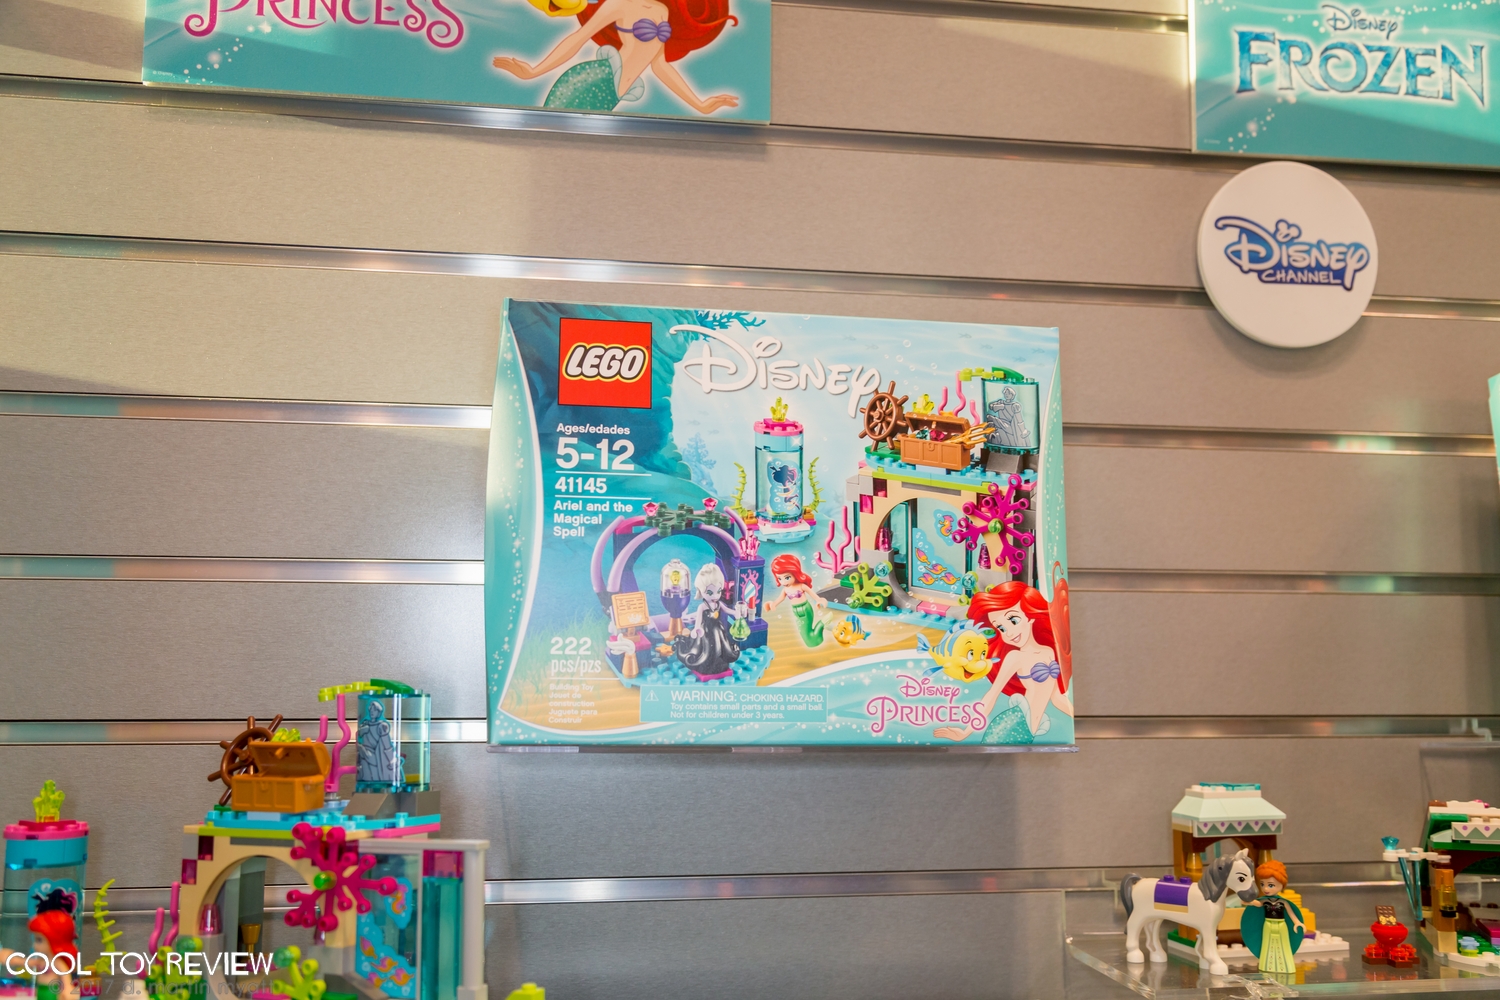 LEGO-2017-International-Toy-Fair-Disney-Princess-002.jpg